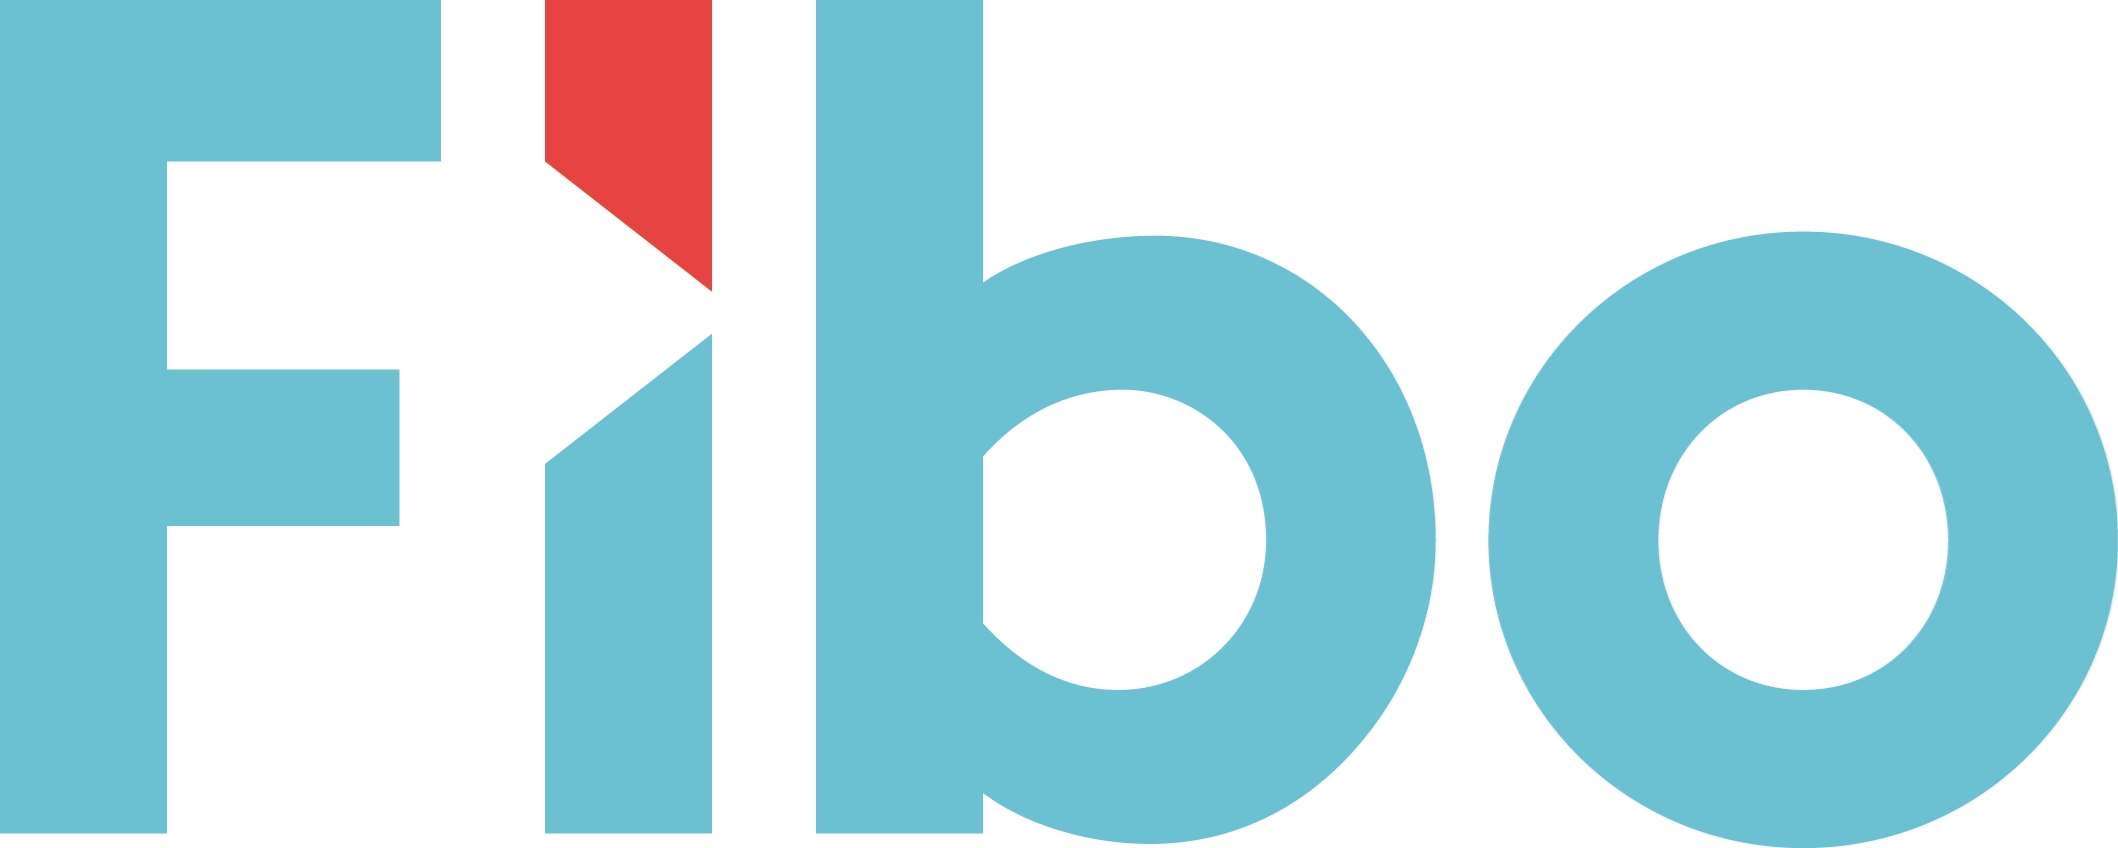 fibo-logo-2016_1785